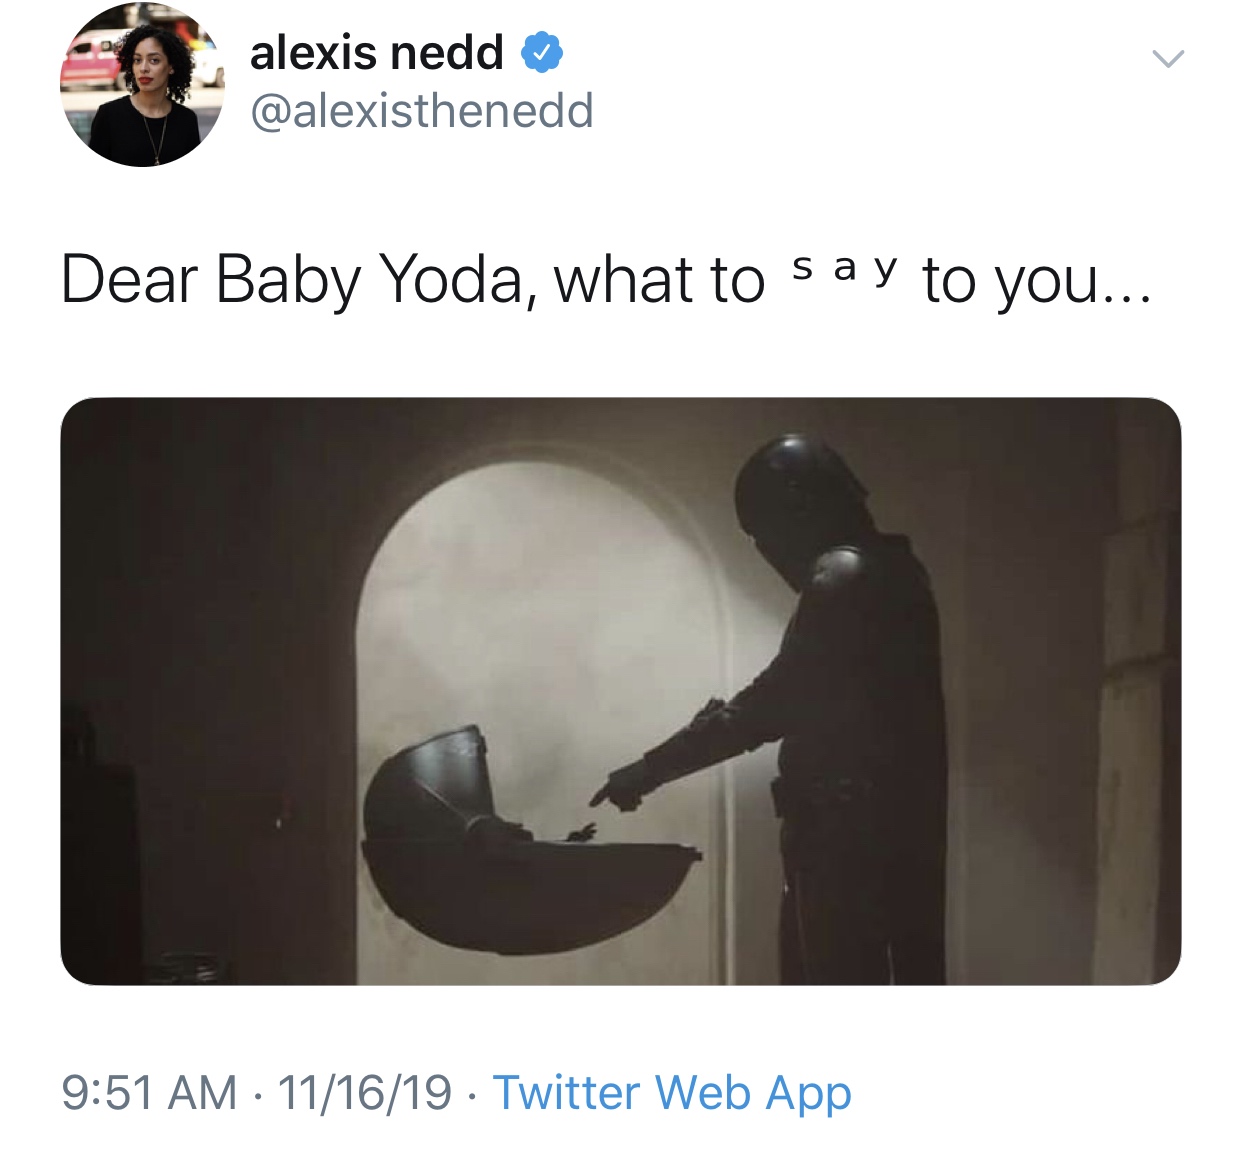 baby yoda meme - presentation - alexis nedd Dear Baby Yoda, what to say to you... 111619 Twitter Web App